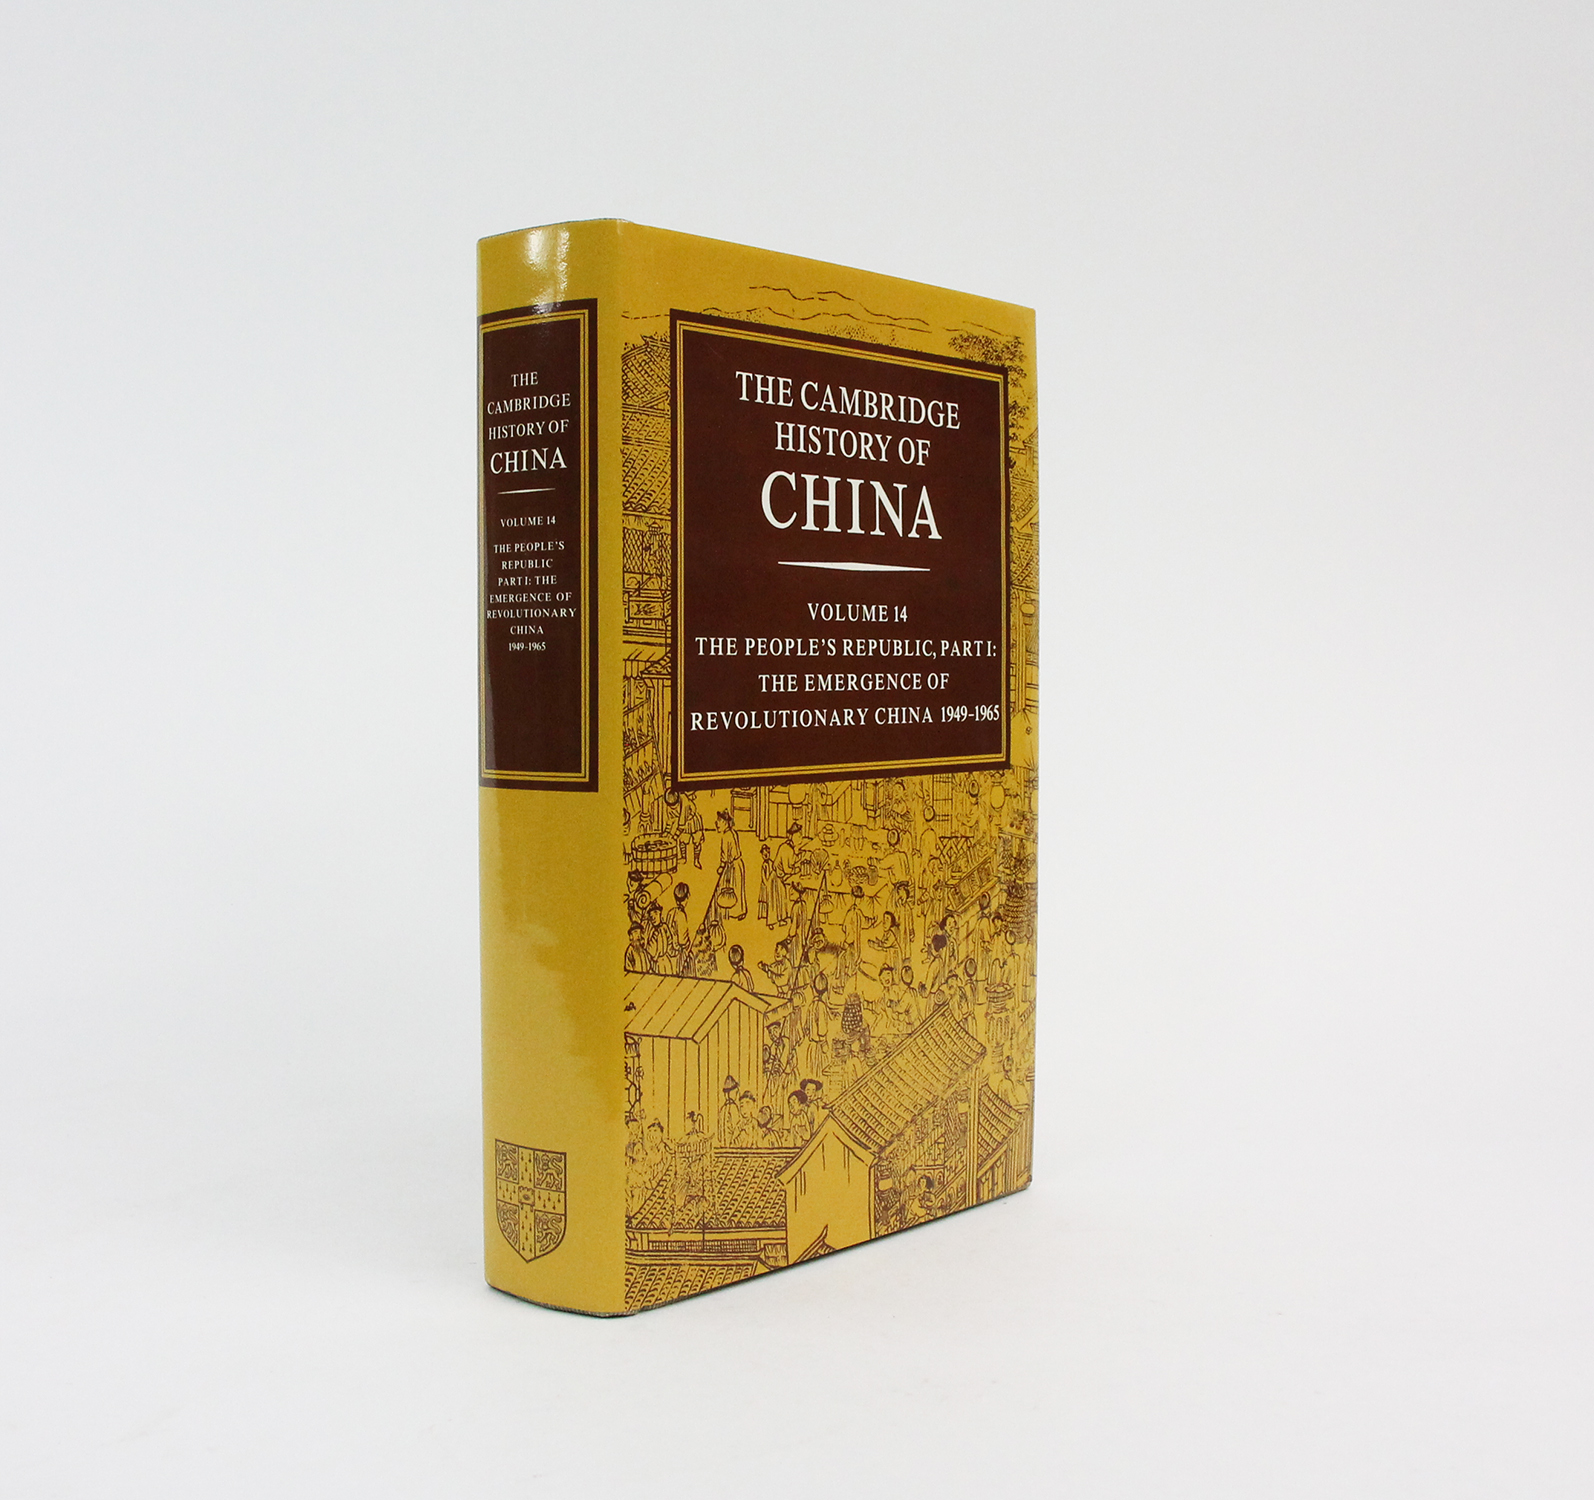 THE CAMBRIDGE HISTORY OF CHINA. VOLUME 14: The People's Republic, Part 1: The Emergence of Revolutionary China 1949-1965. - MACFARQUHAR, Roderick; FAIRBANK, John K.